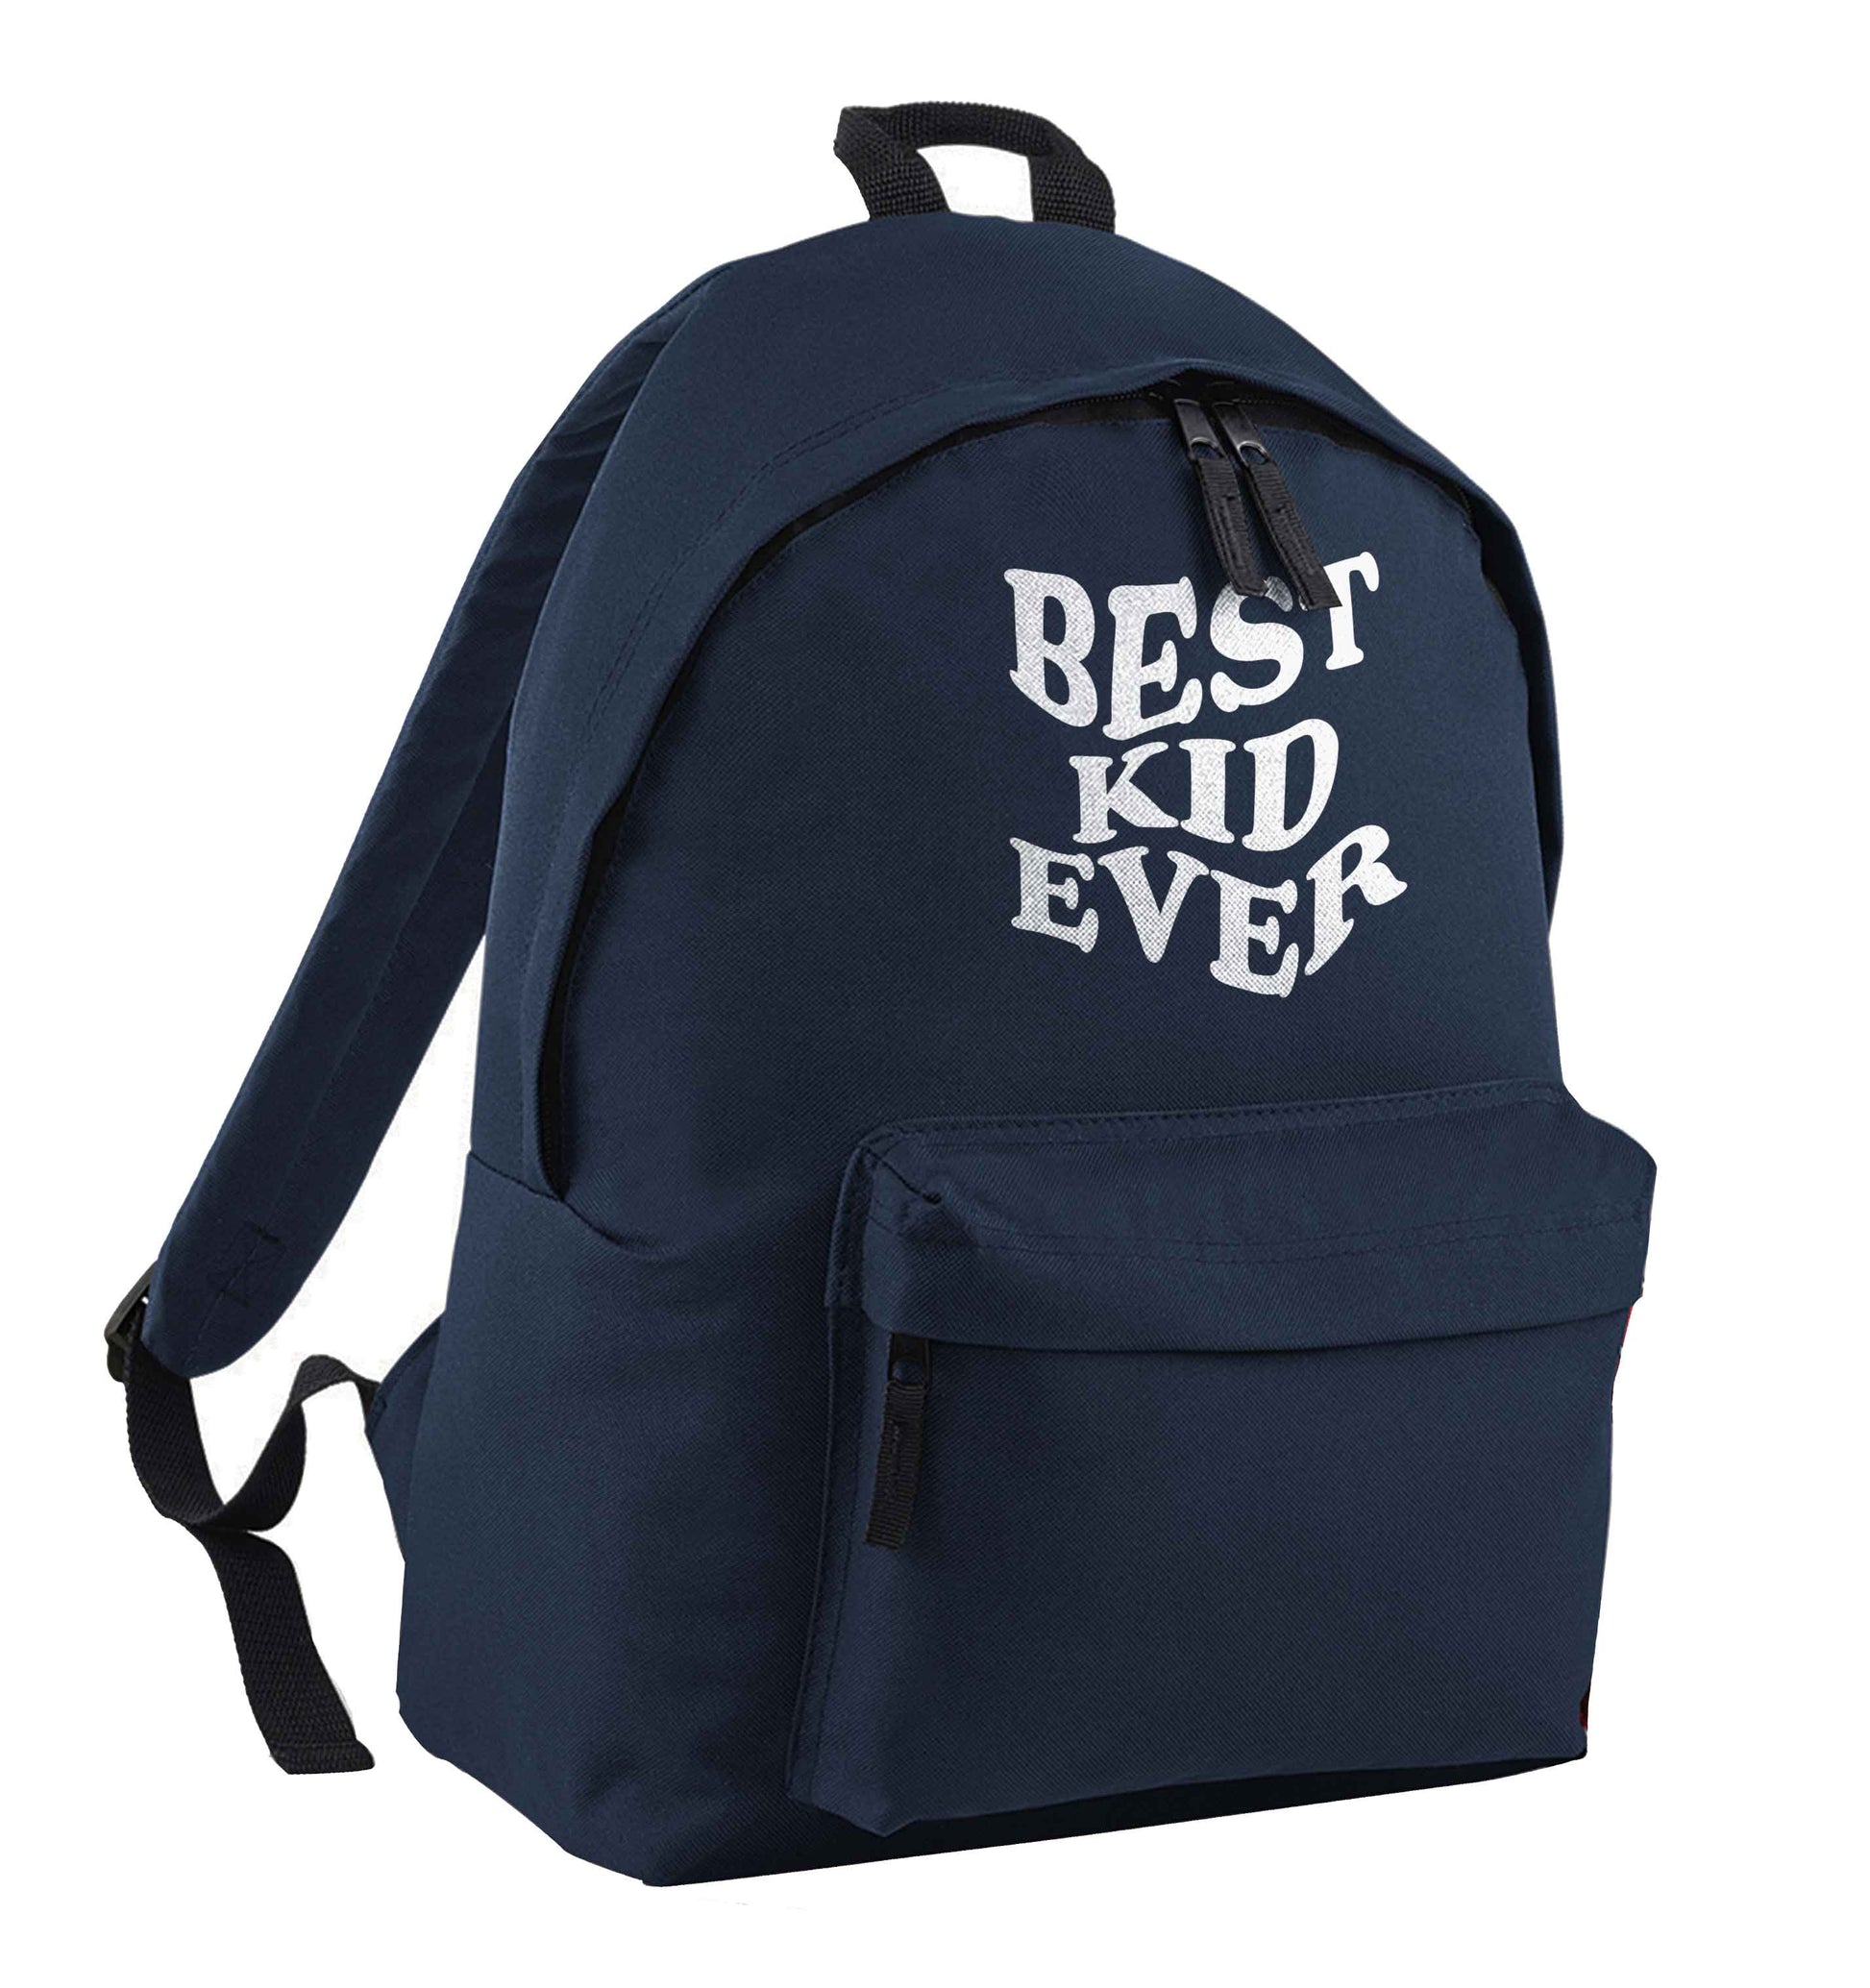 Best kid ever navy children's backpack